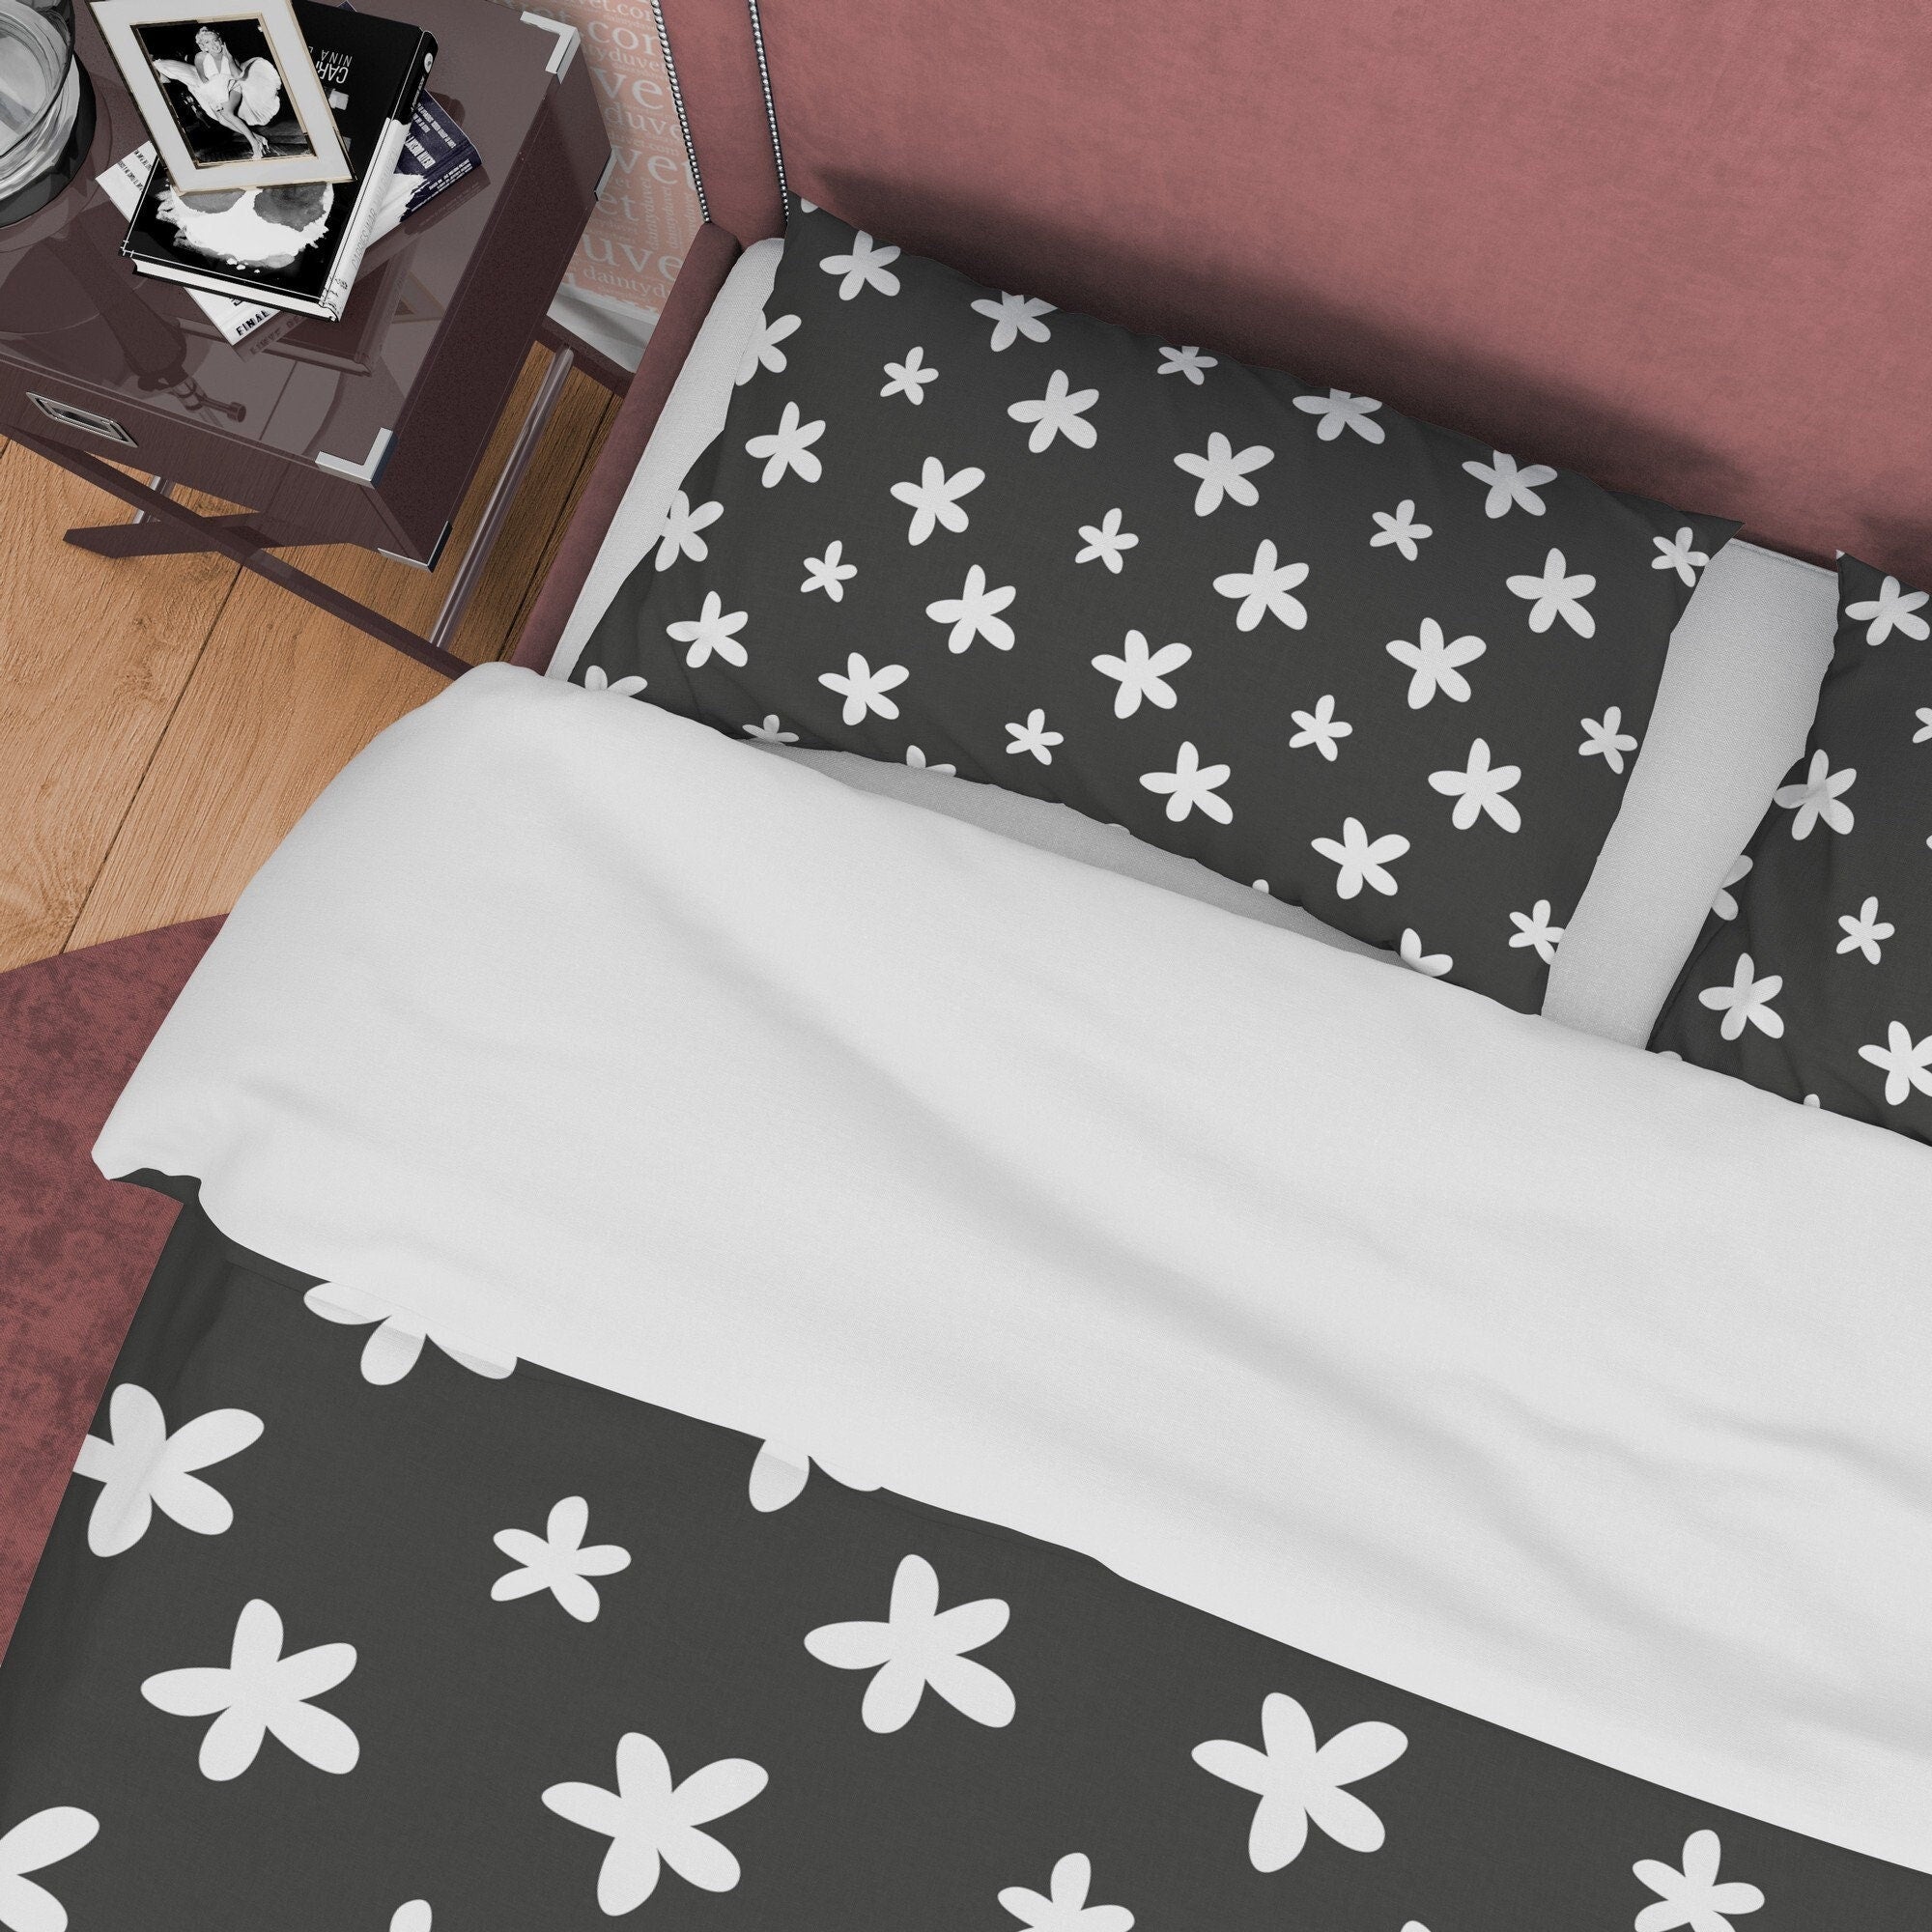 Geometric Star Like Flower Duvet Cover Black and White Bedspread, Retro Printed Bedding Set, 90s Nostalgia Quilt Cover, Groovy Blanket Cover